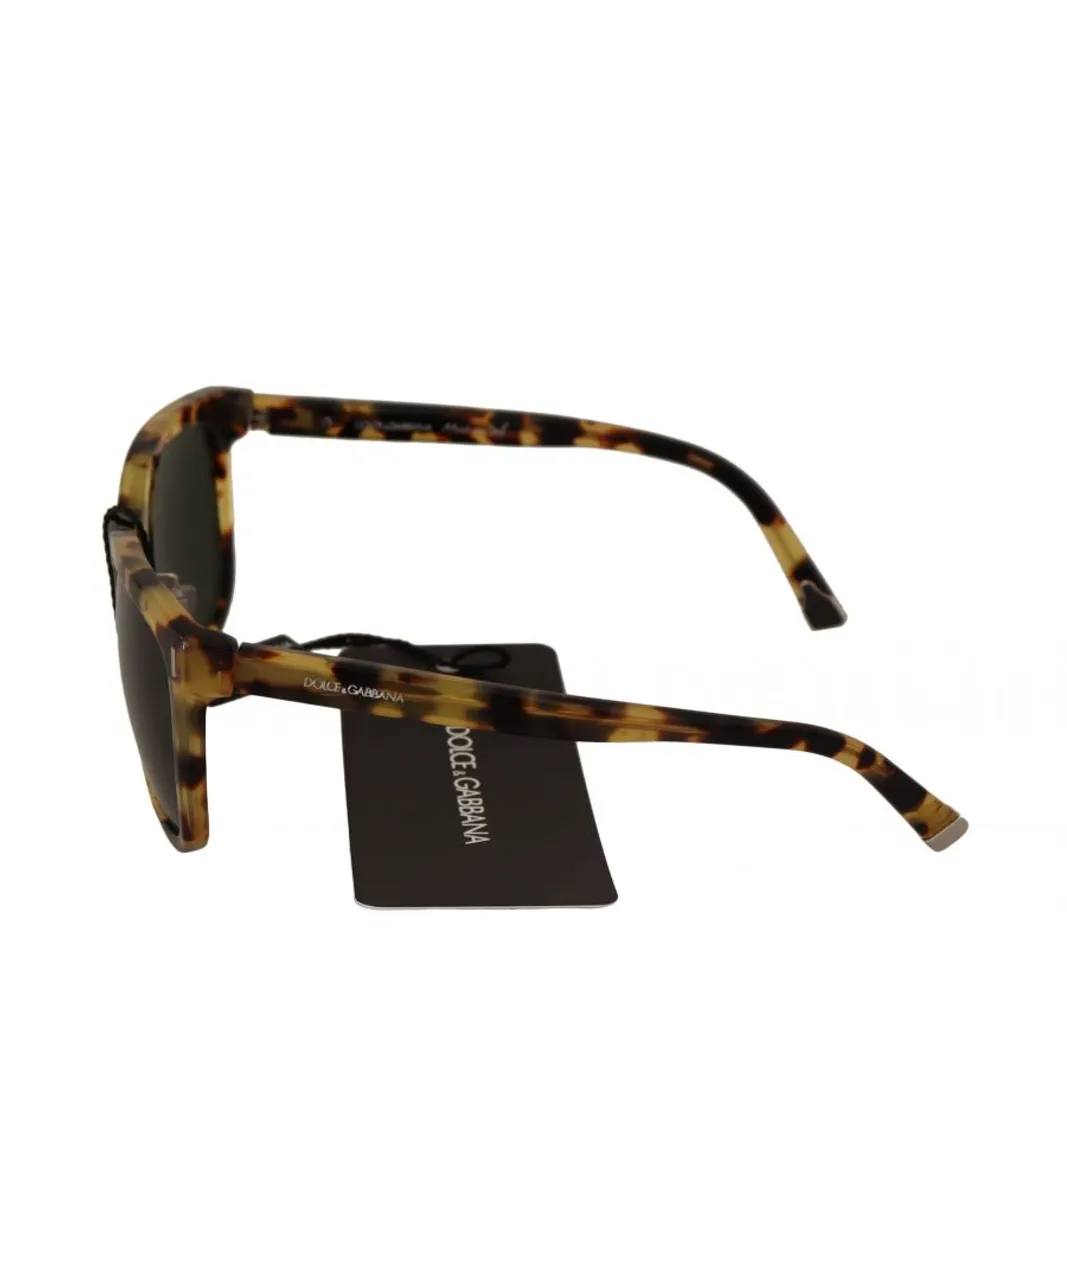 Dolce & Gabbana WoMens Brown Tortoise Shell Green Lens Sunglasses - One